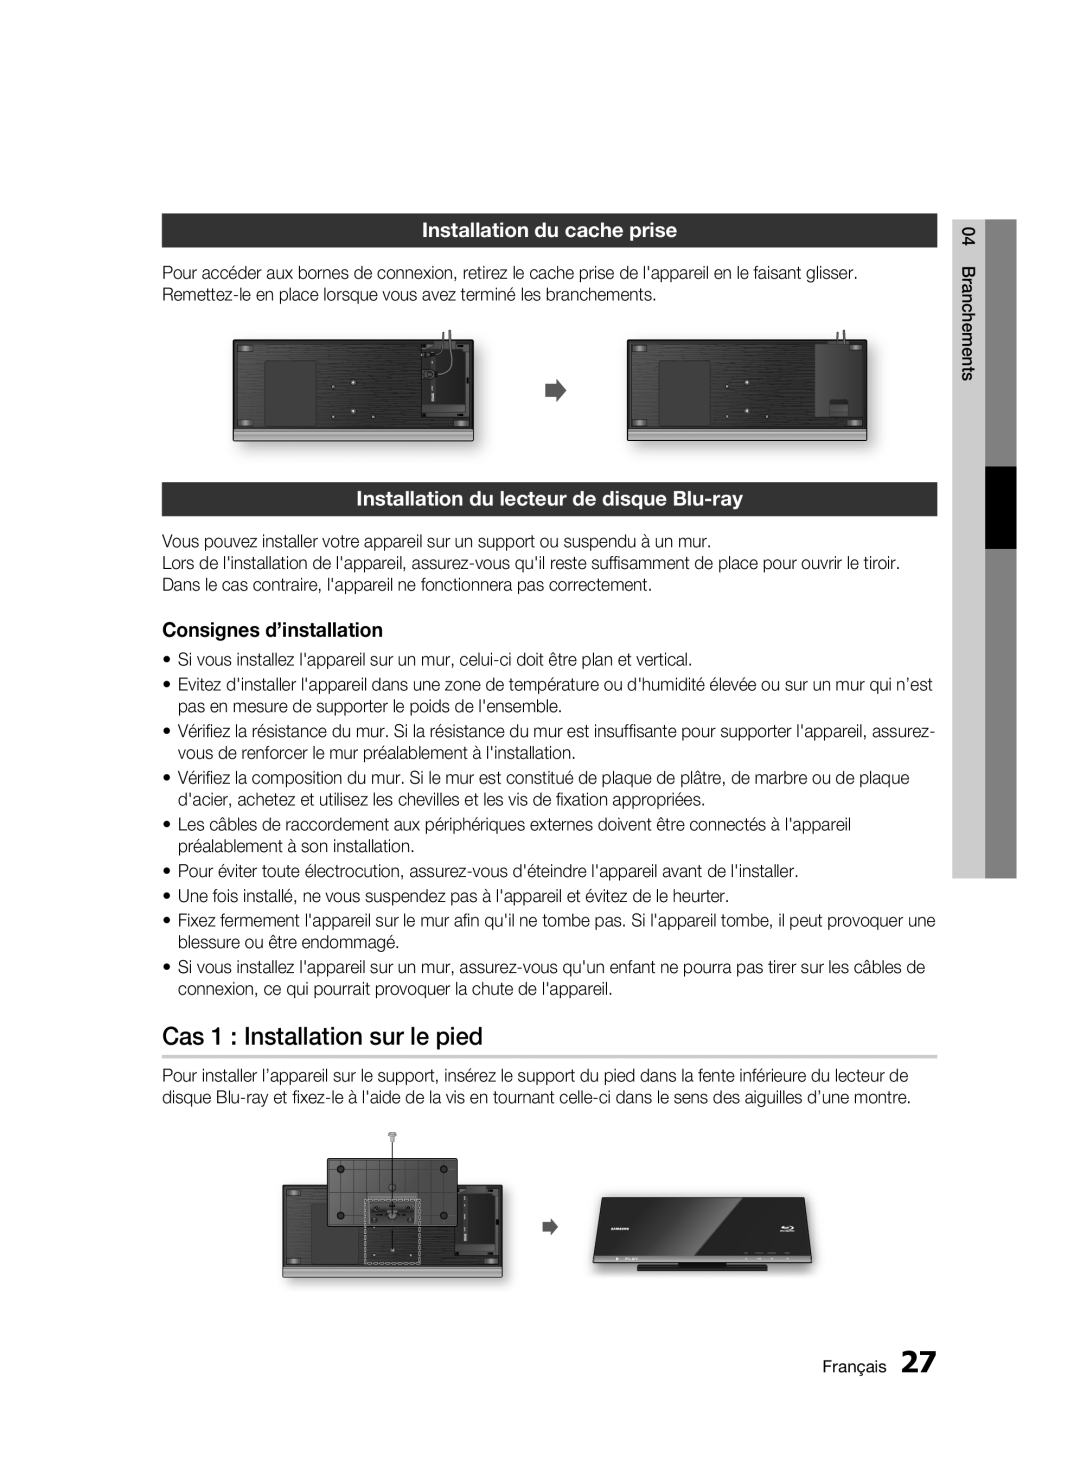 Samsung BD-C7500/EDC, BD-C7500/XEF manual Cas 1 Installation sur le pied, Installation du cache prise 